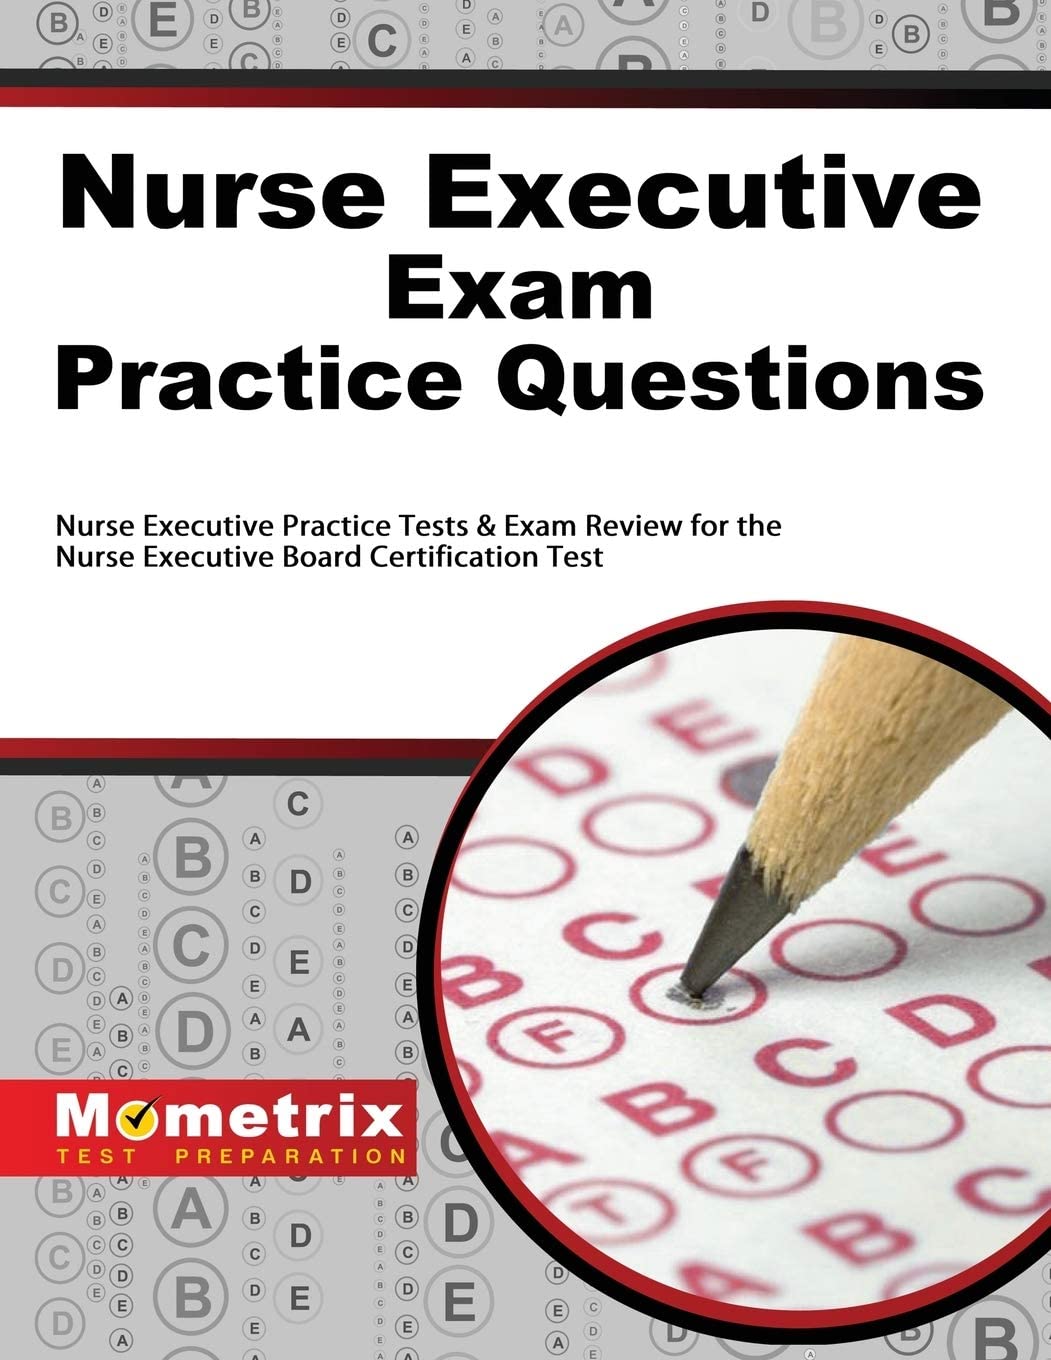 Nurse Executive Exam Practice Questions: Nurse Executive Practice Tests & Exam Review for the Nurse Executive Board Certification Test (Mometrix Test Preparation)